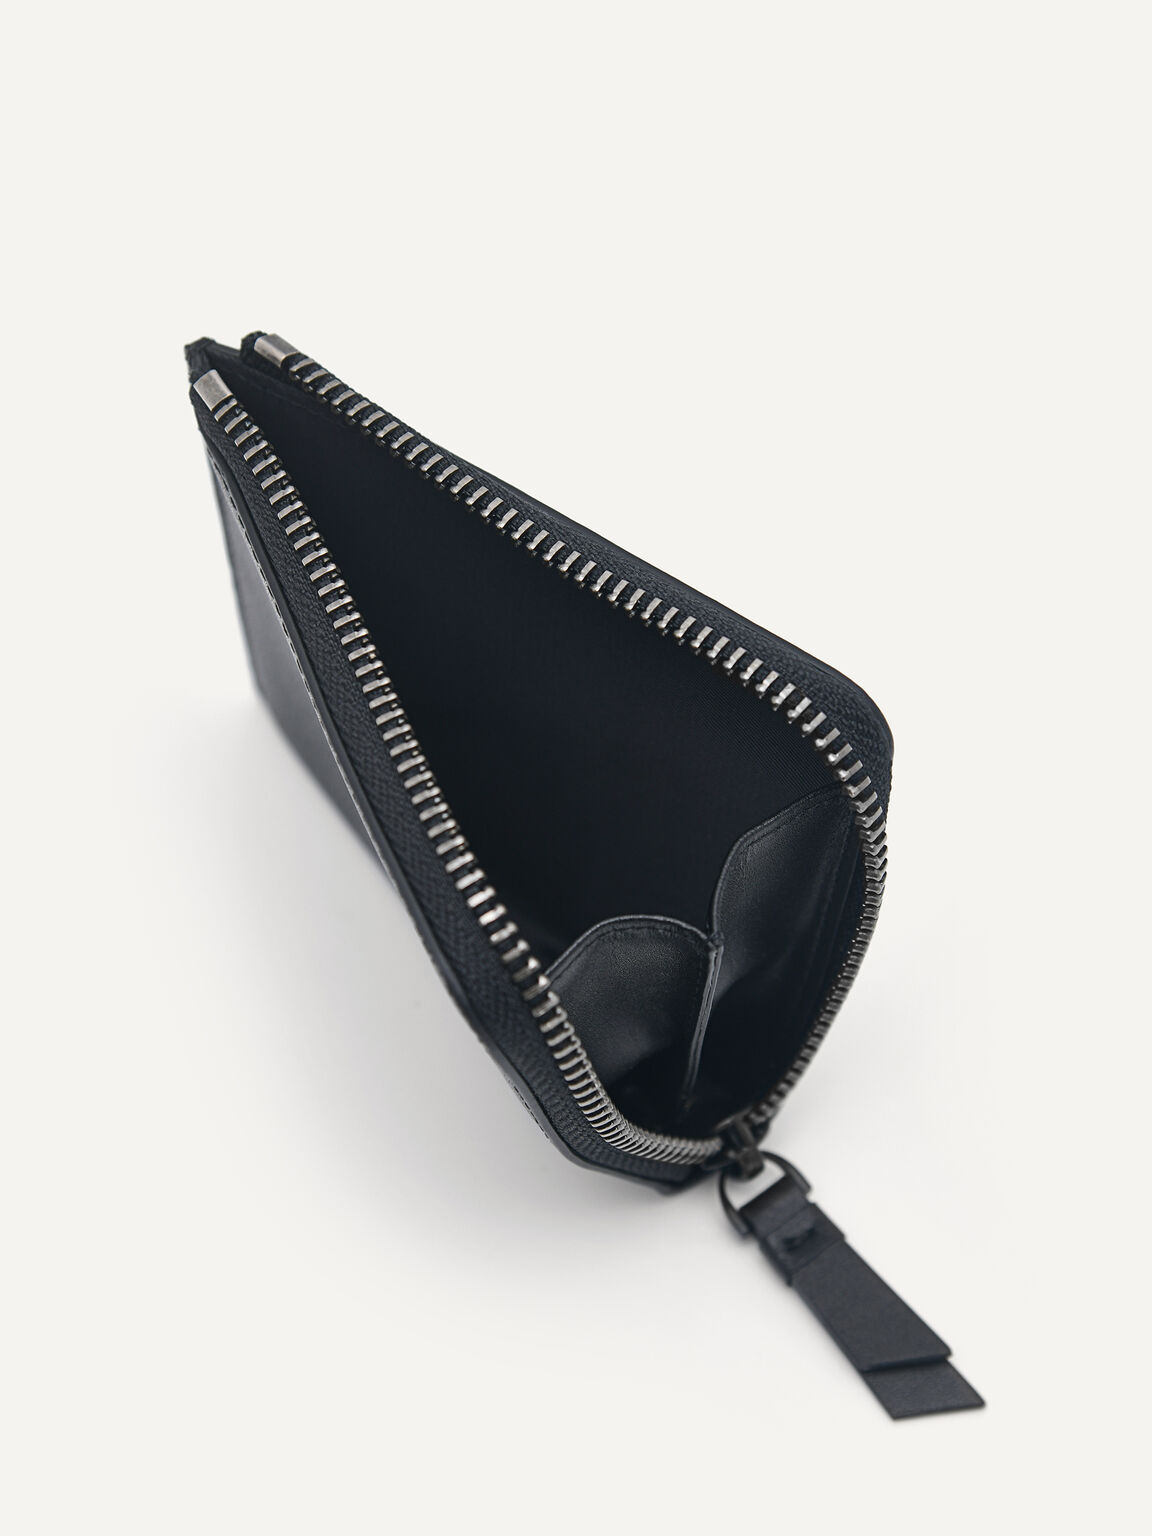 Unisex Leather Zipper Wallet, Black